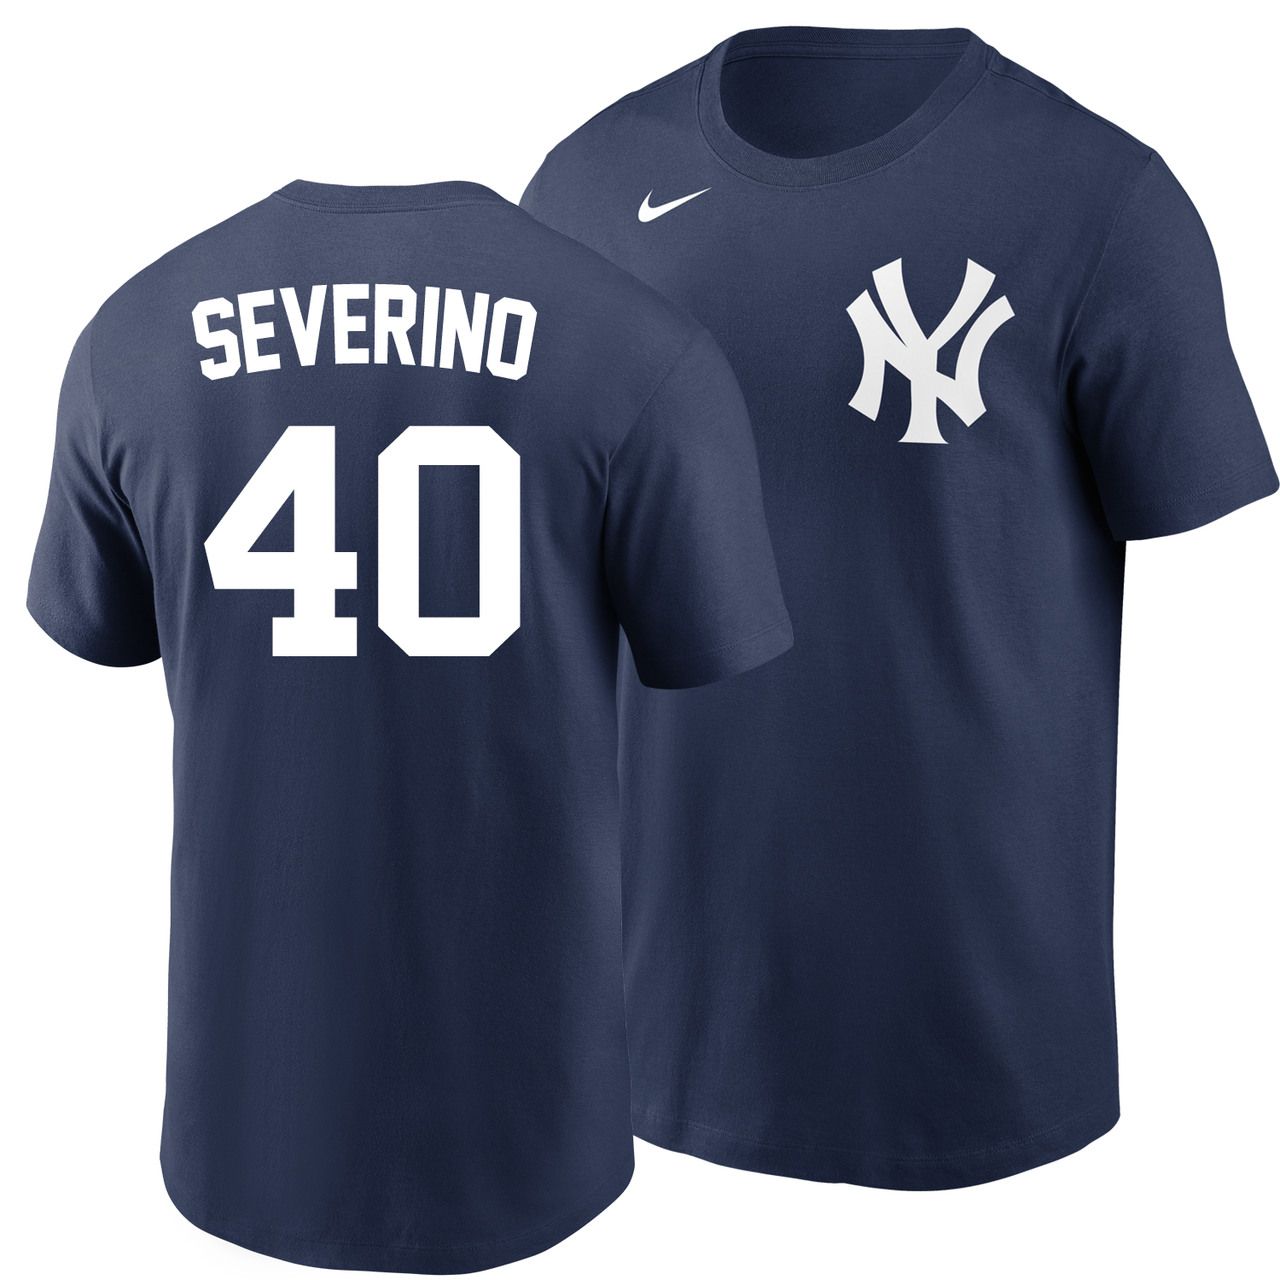 Yankees Luis Severino Name and Number Mens Tee